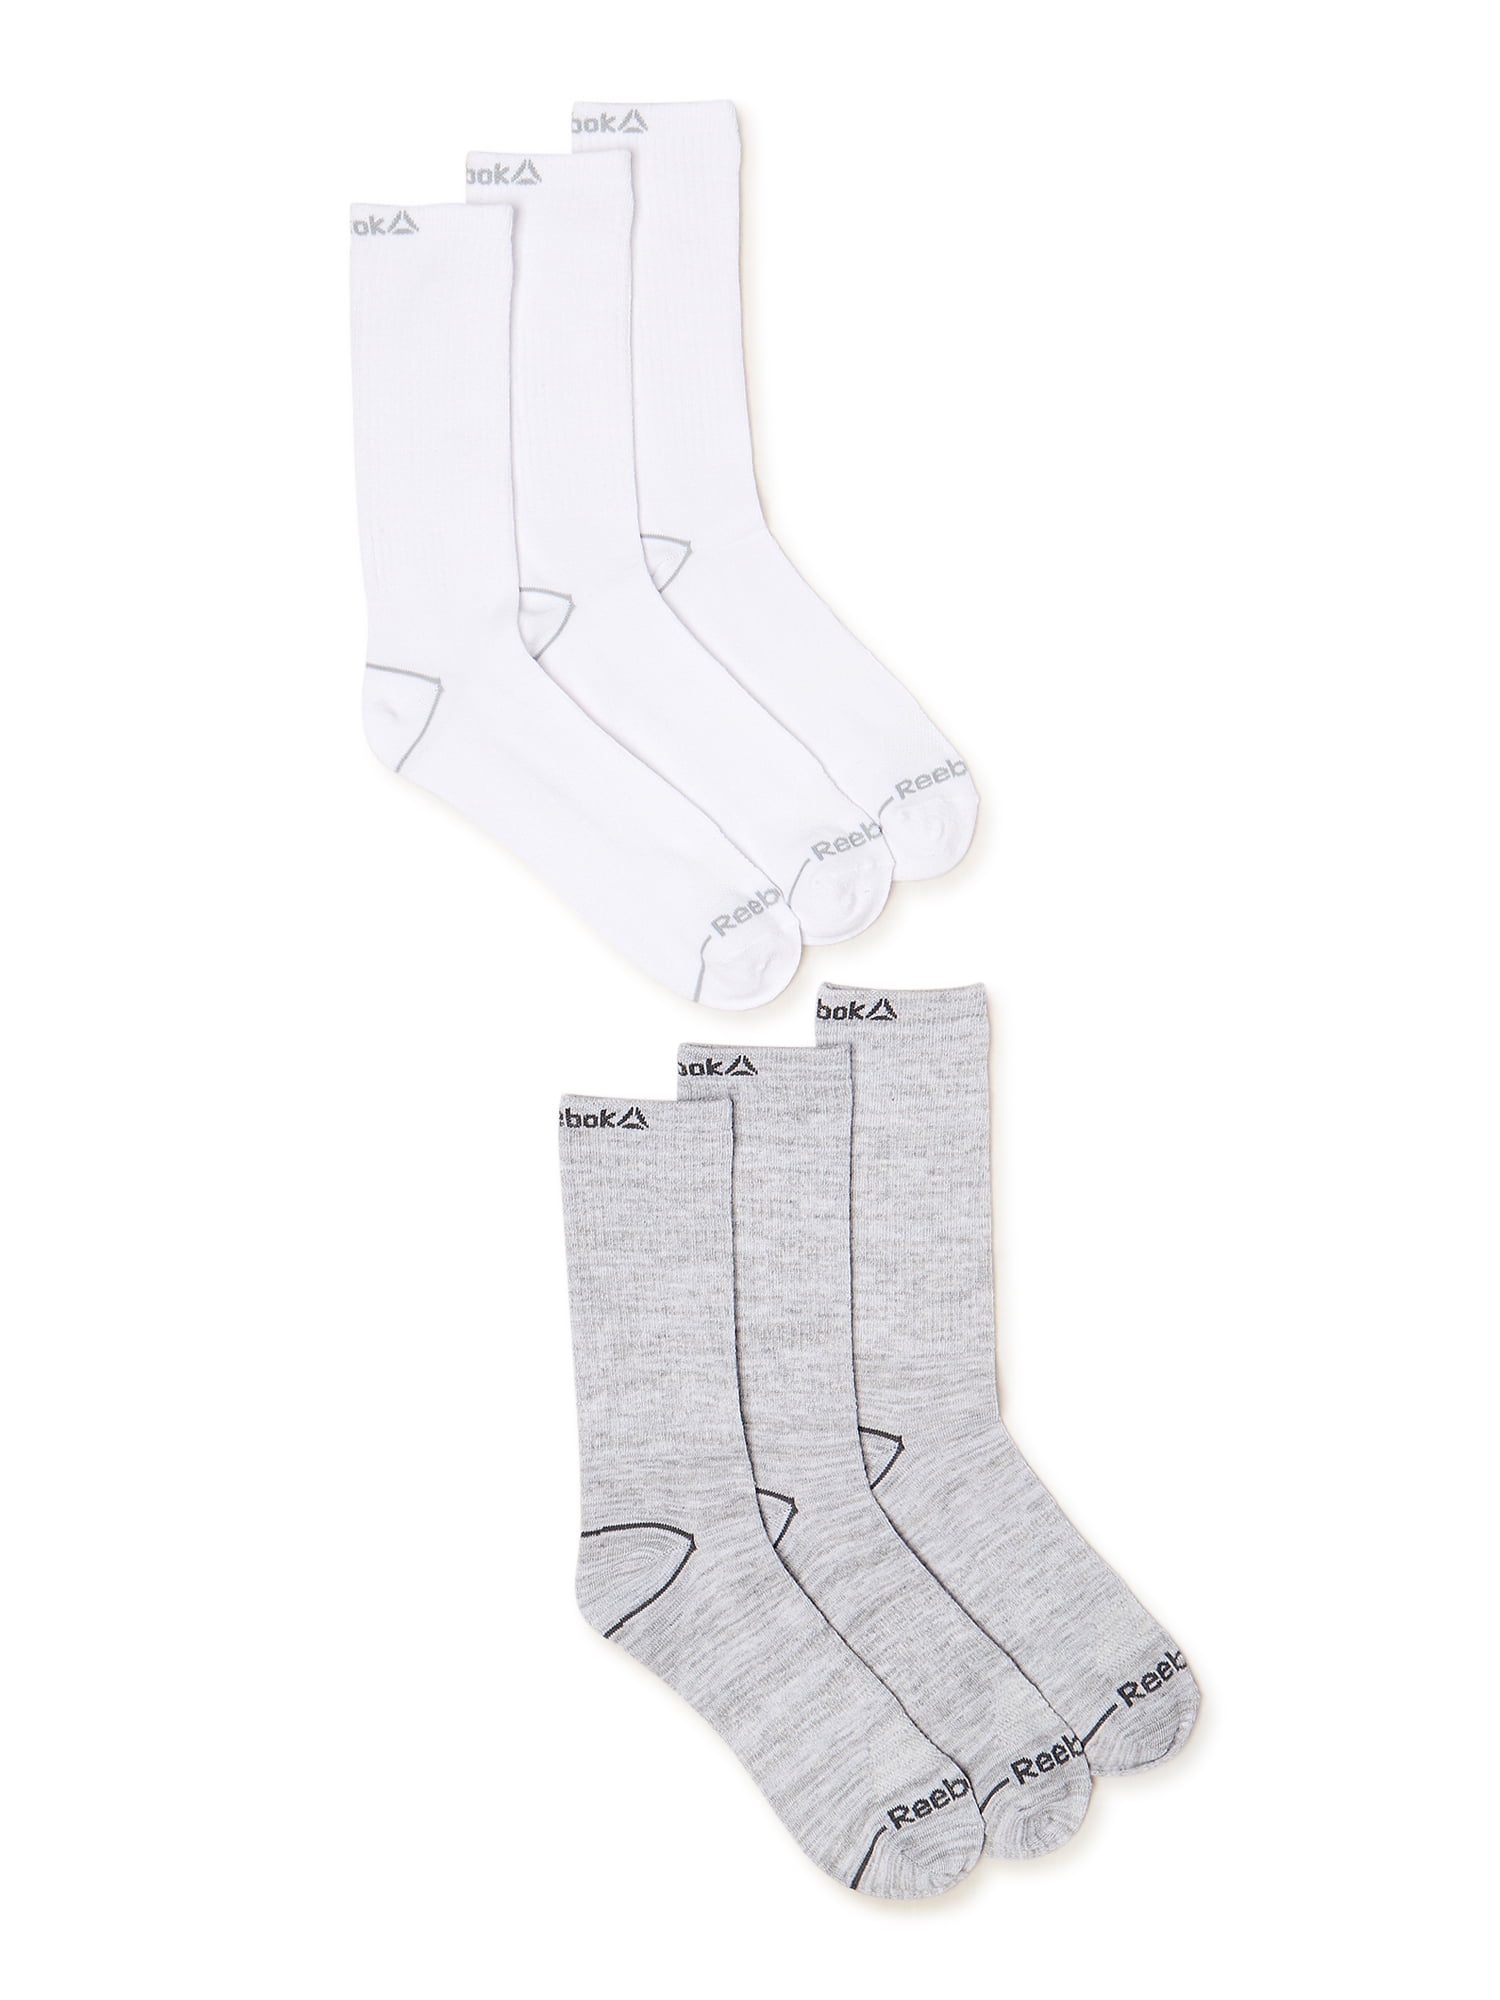 Reebok Men's Series Crew Socks, 6-Pack, Sizes 6-12 - Walmart.com